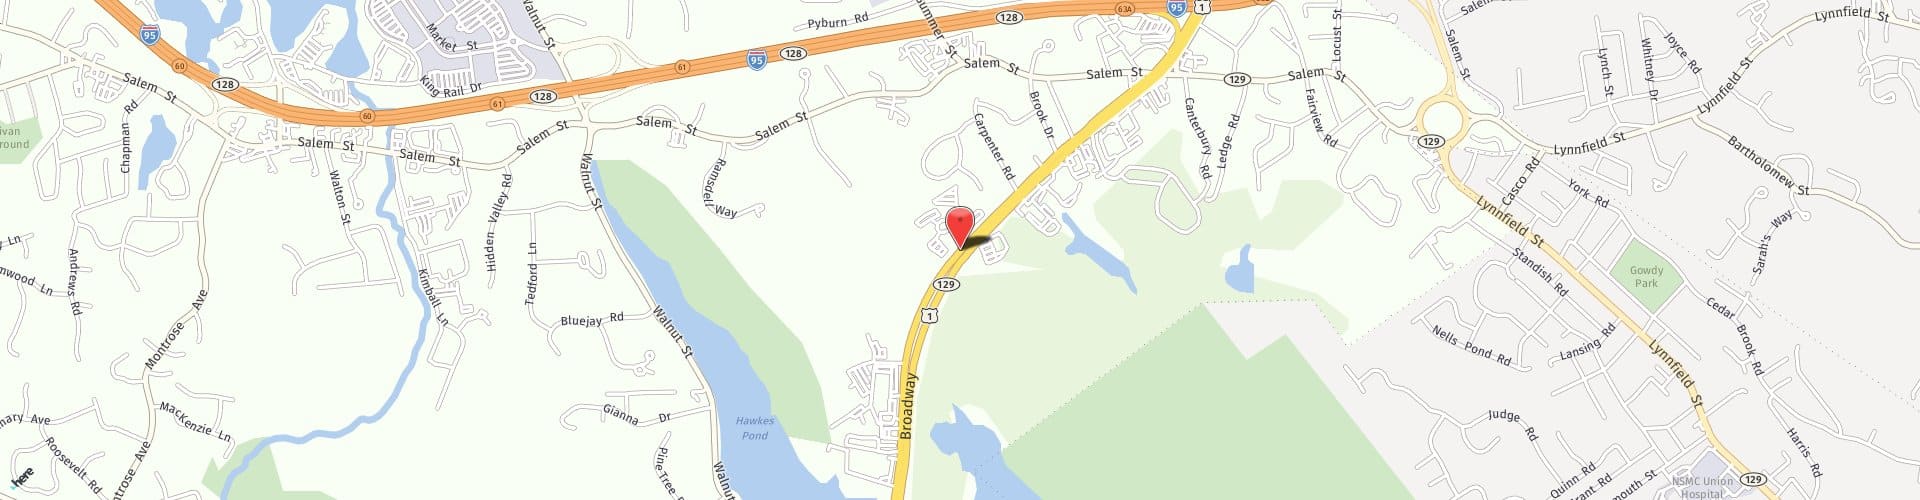 Location Map: 210 Broadway Lynnfield, MA 01940